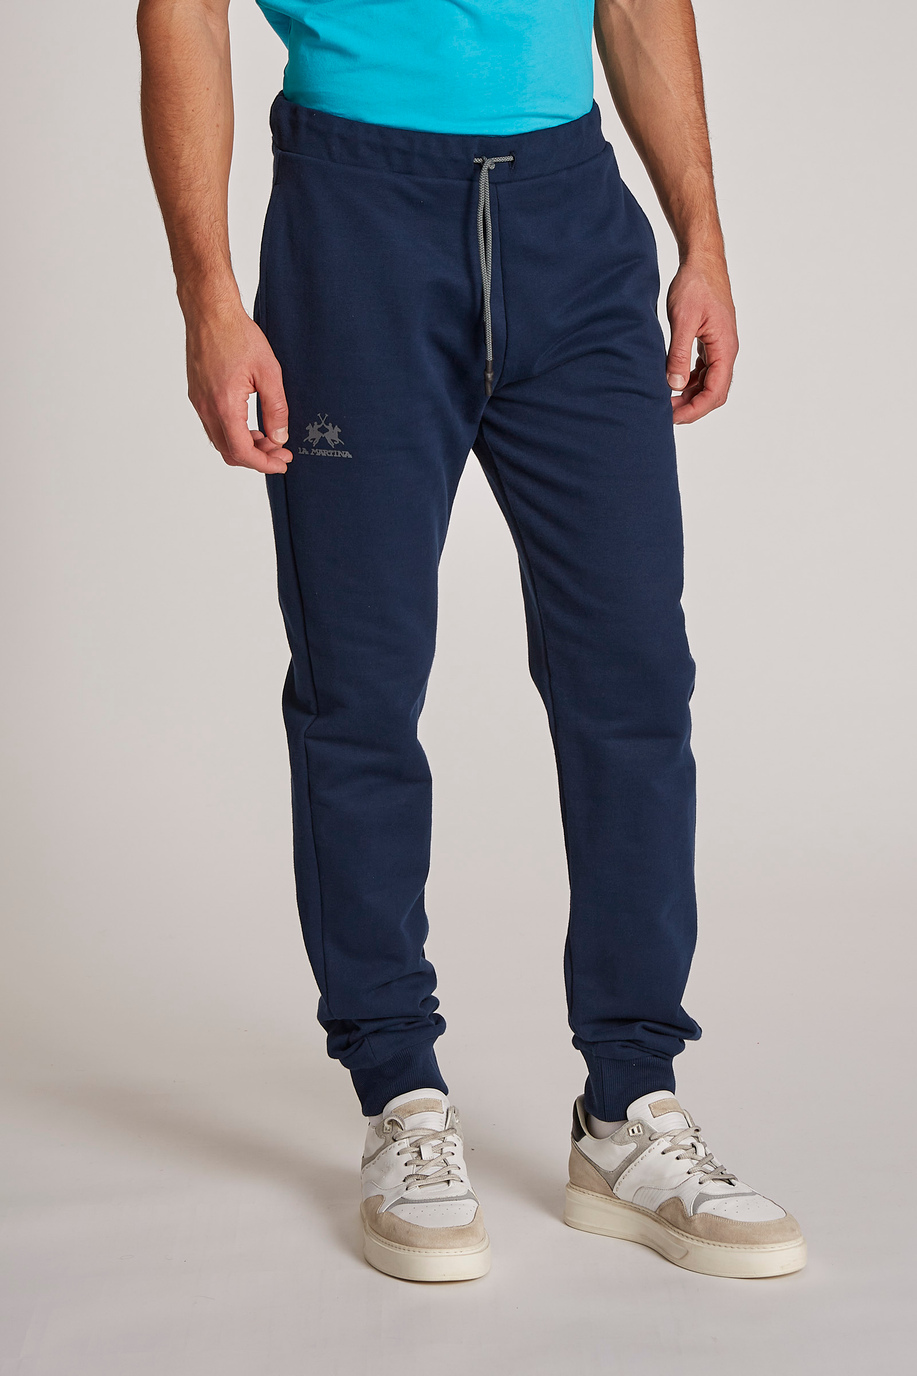 Pantalone da uomo regular fit - Uomo | La Martina - Official Online Shop